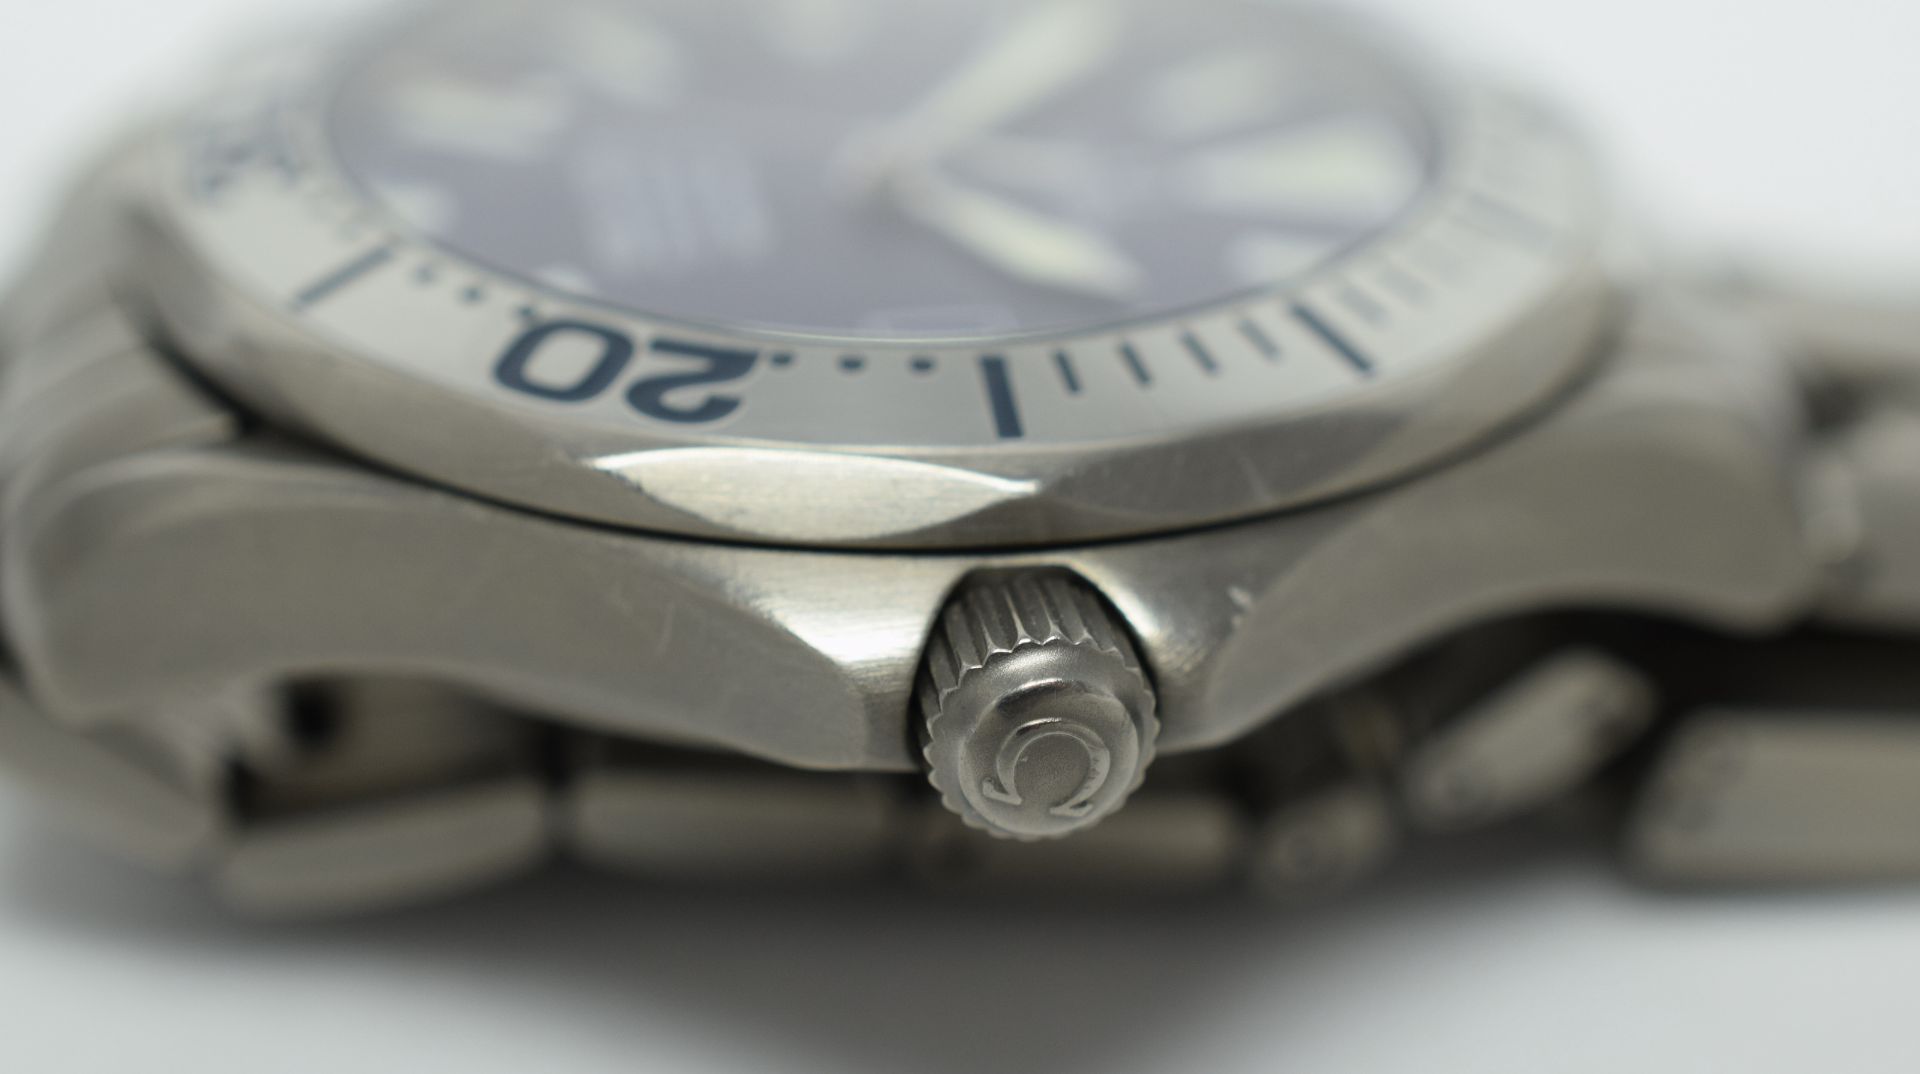 Omega Seamaster Professional Chronometer 300mts/1000ft In Titanium On Titanium Bracelet - Image 8 of 10